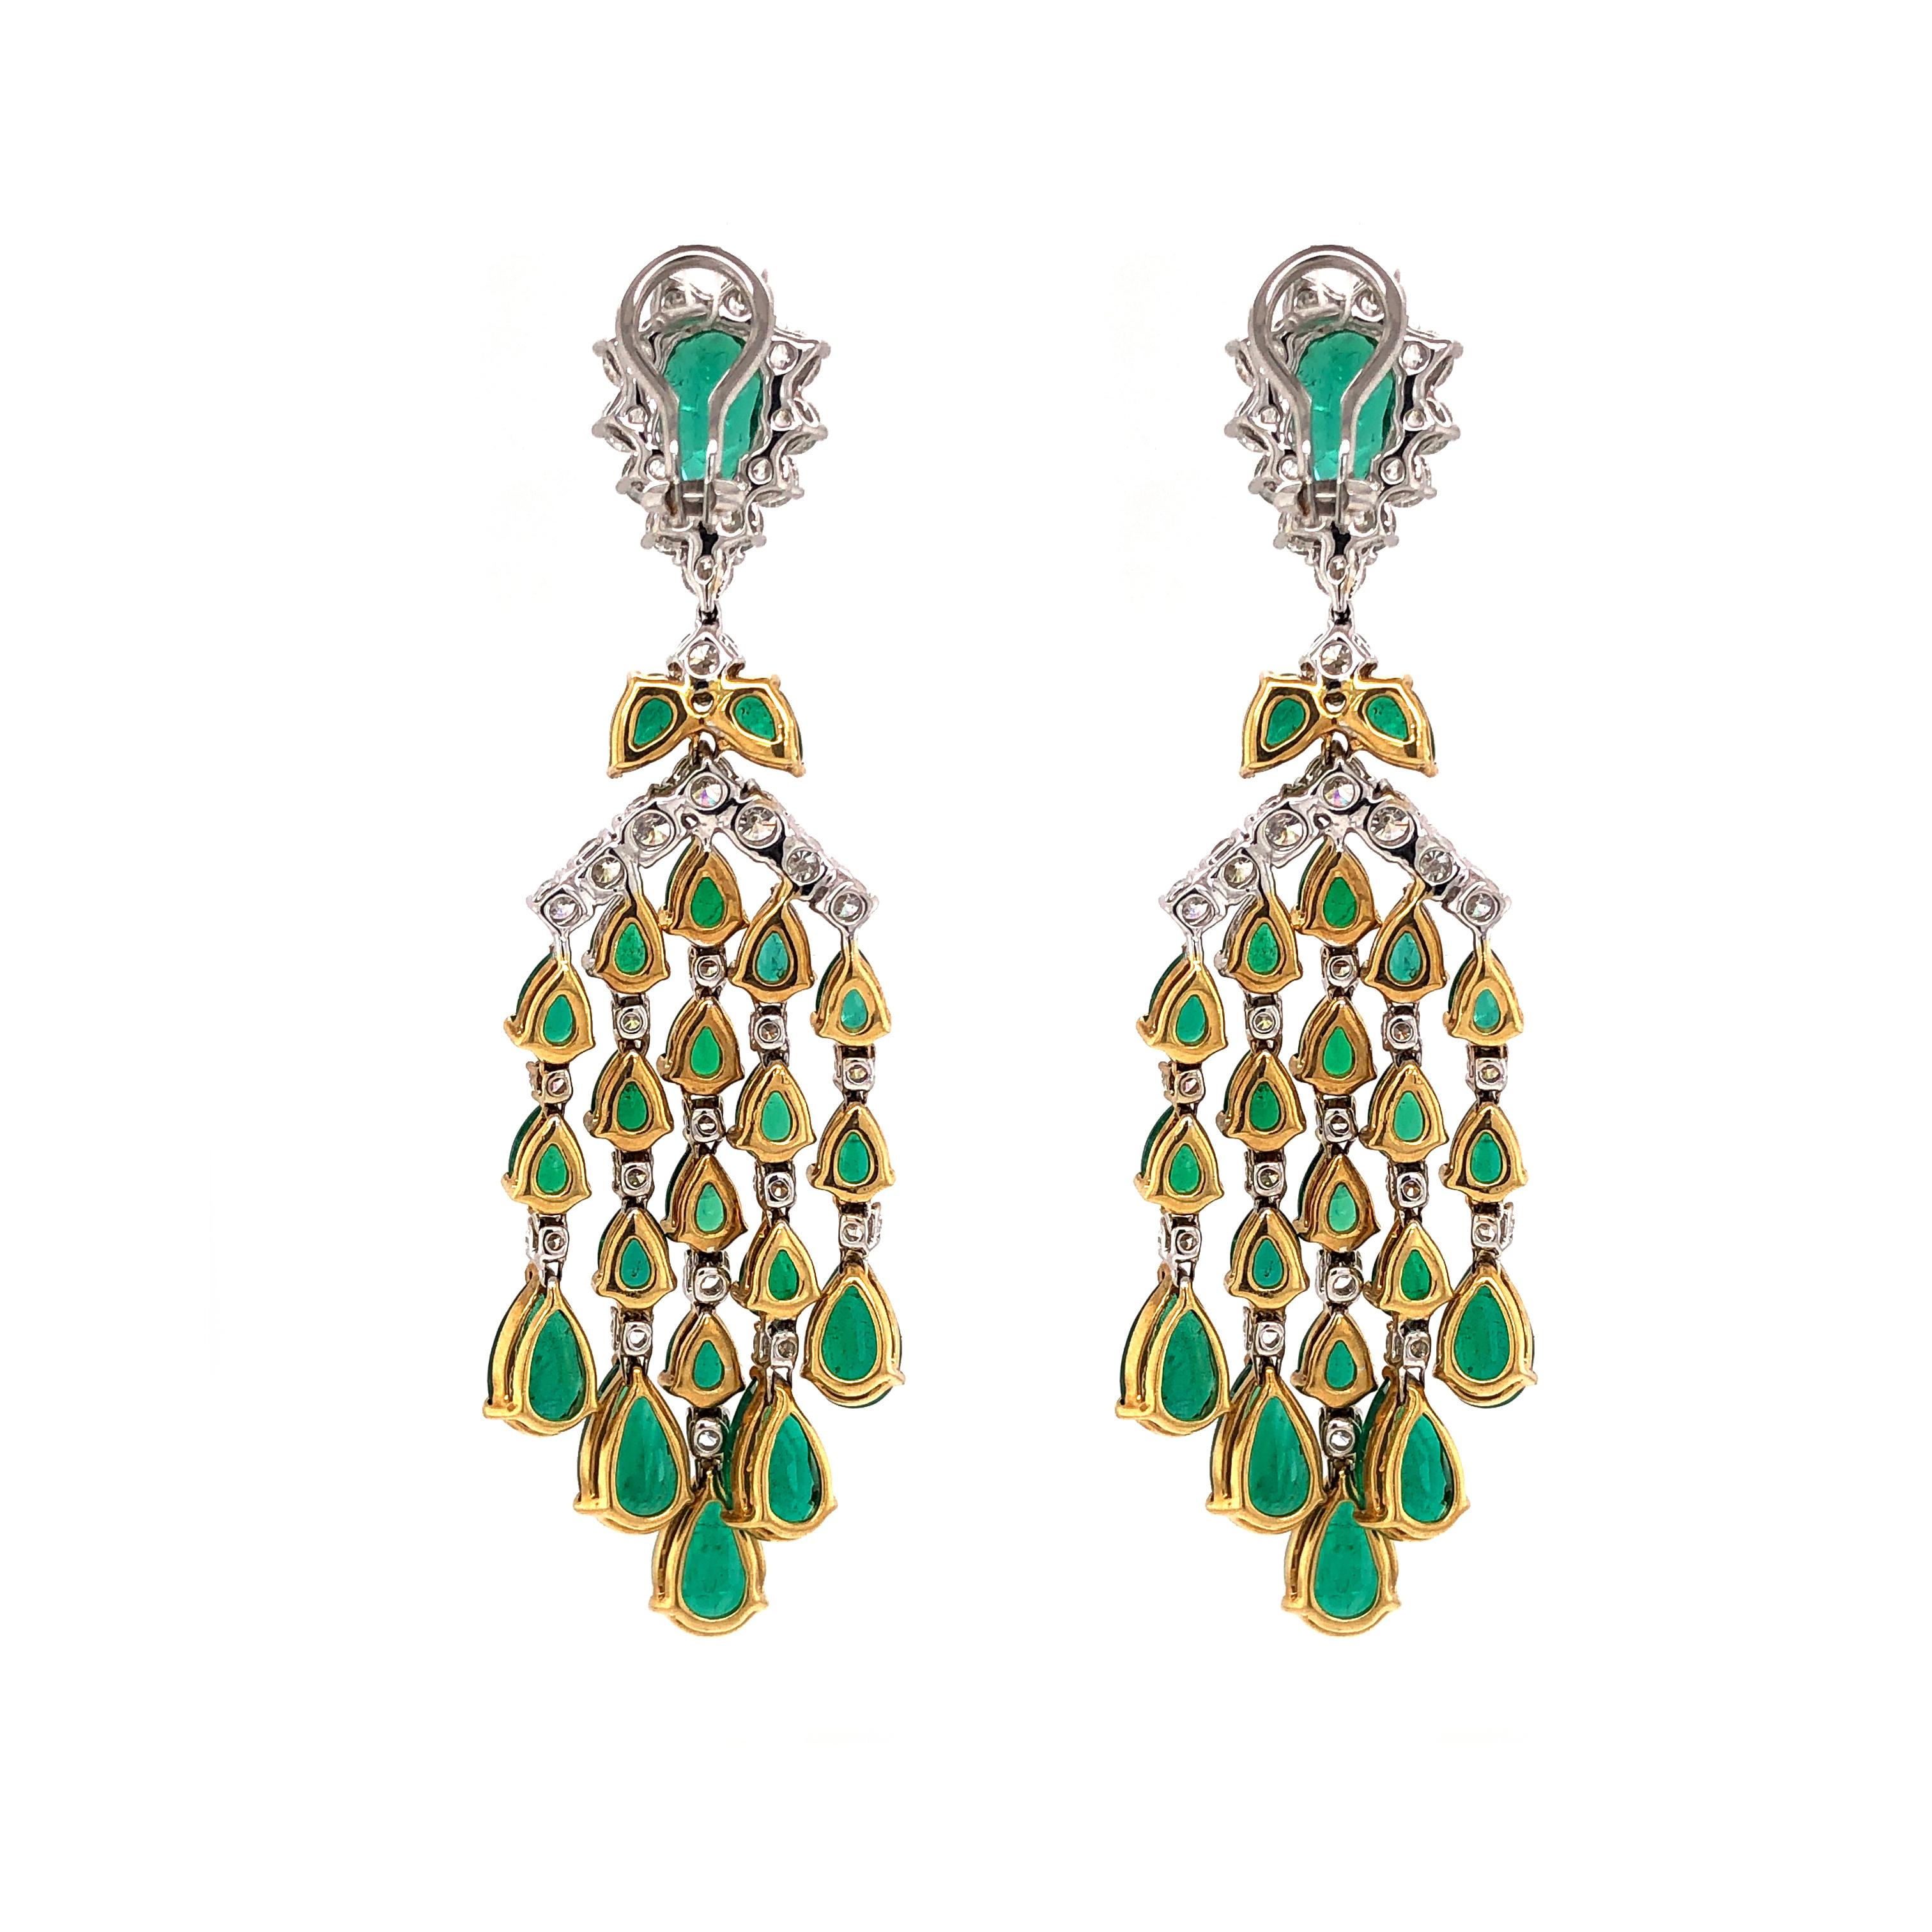 Zambian Pear Cut Emeralds 23.82 carat Diamonds Chandelier 18k Gold Earrings In New Condition For Sale In New York, NY